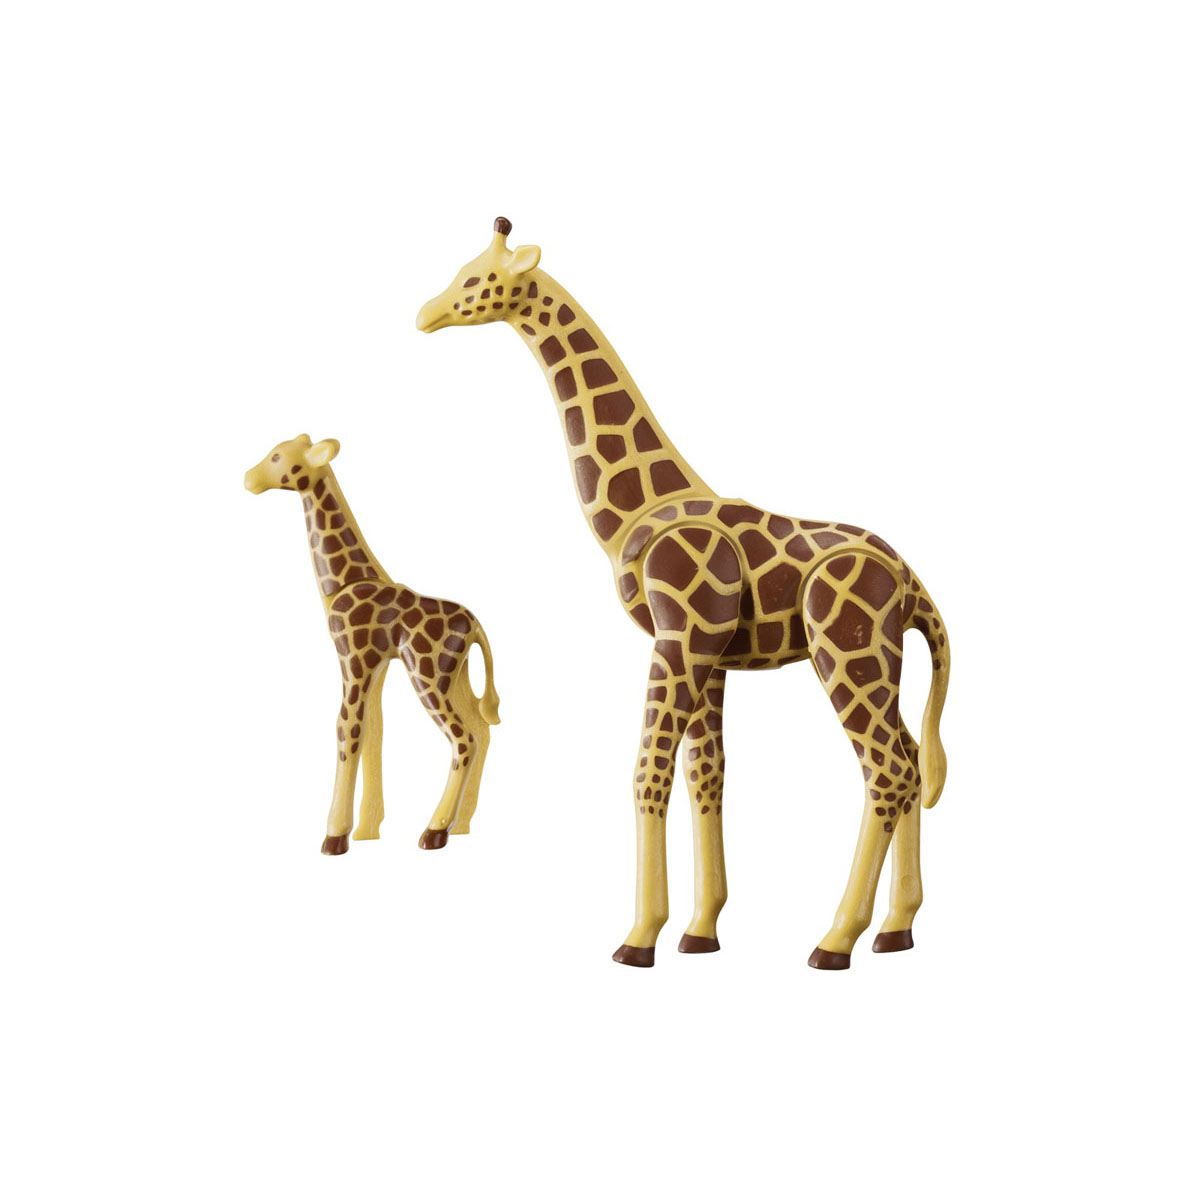 Playmobil Конструктор Жираф со своим детенышем жирафом 6640pm - фото 1